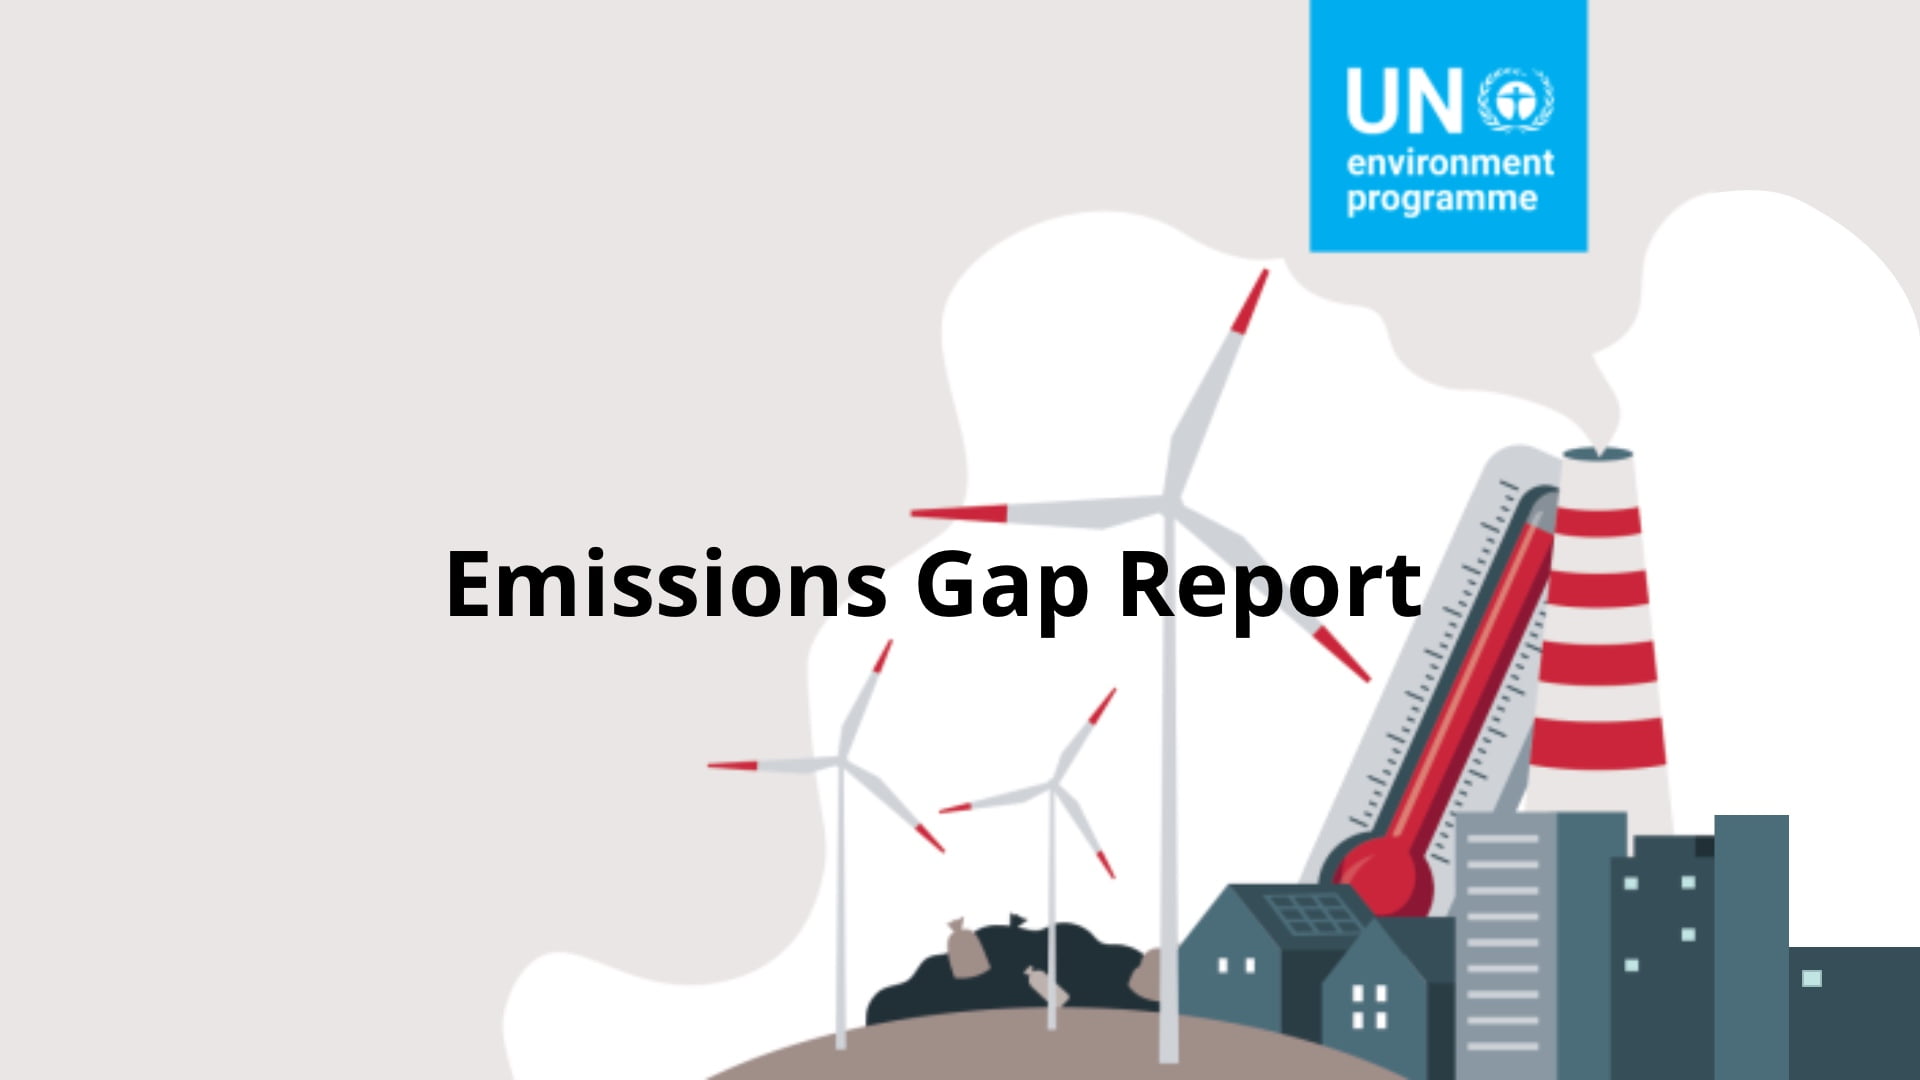 thefuture, Resurs, Emissions Gap Reports